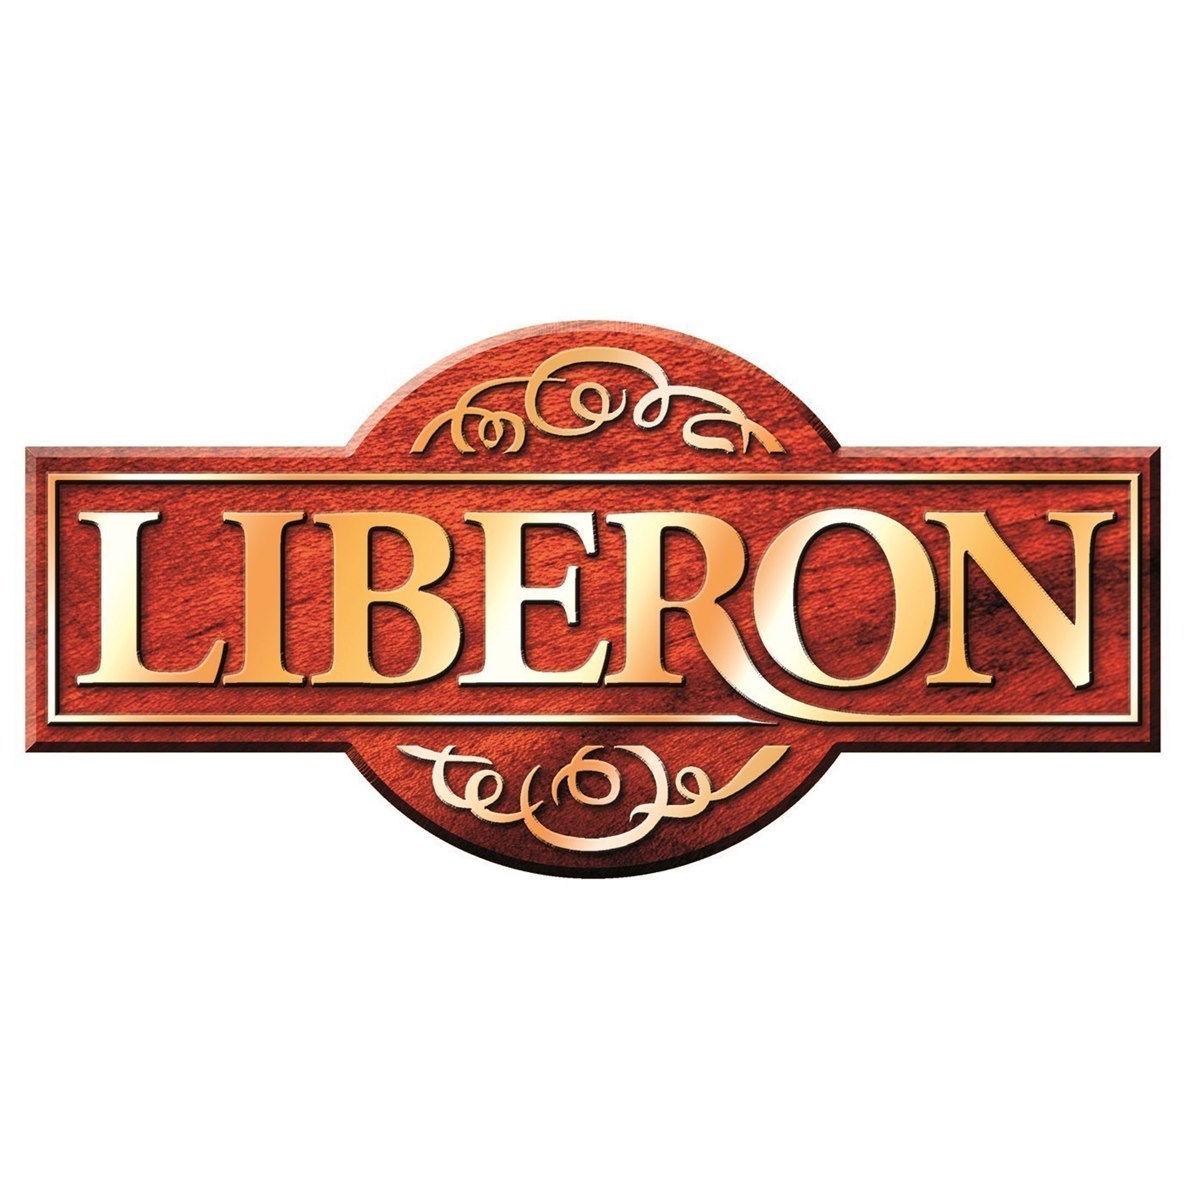 Where to buy Liberon Wood Dye